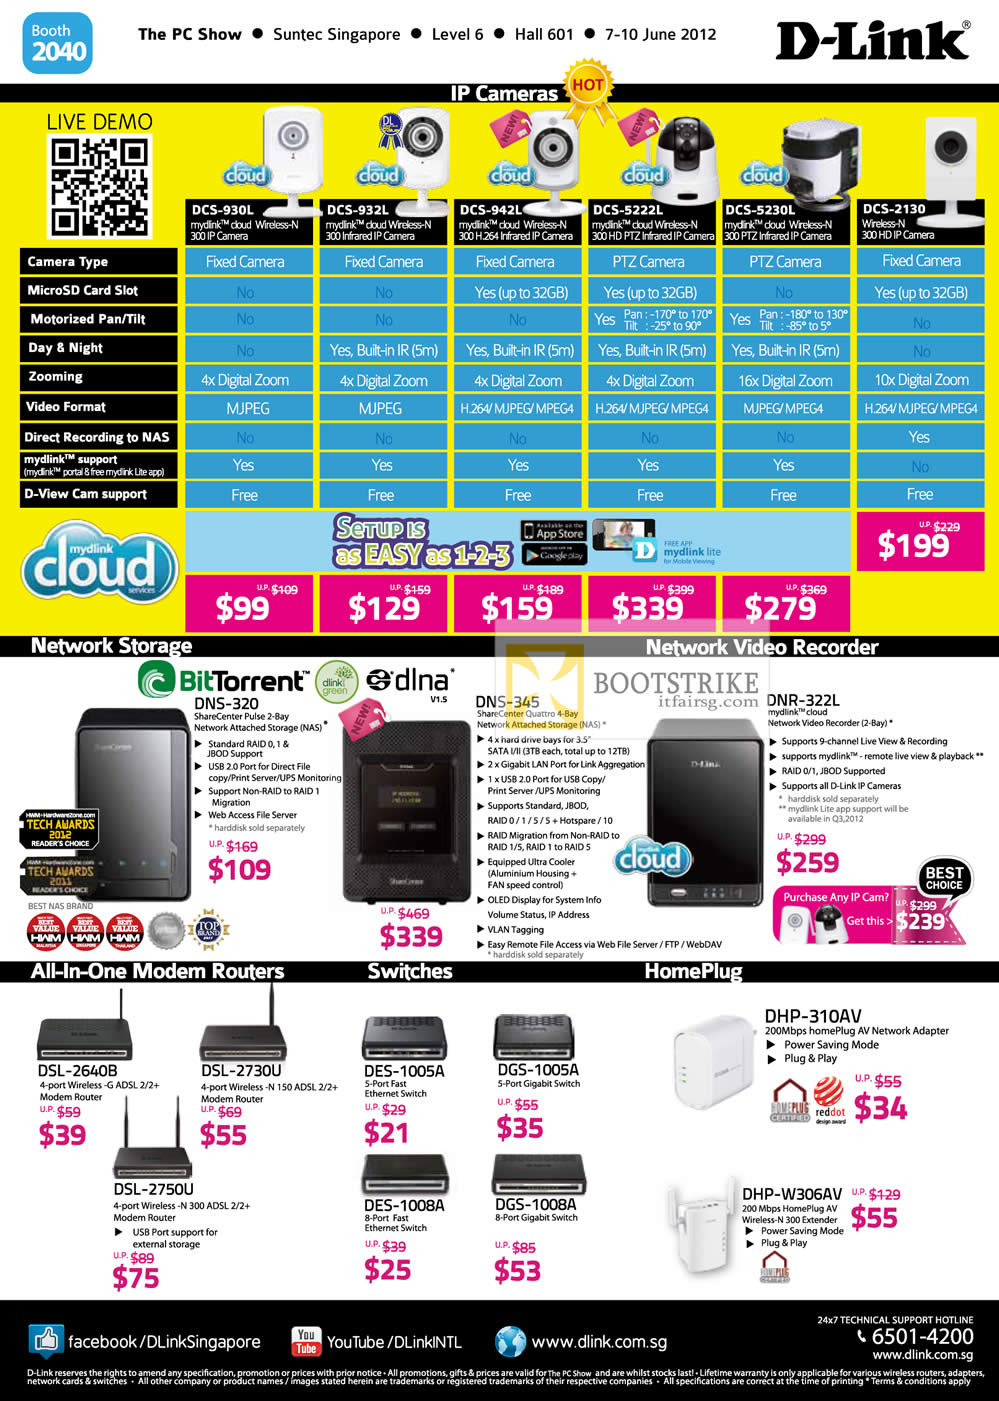 PC SHOW 2012 price list image brochure of D-Link Networking IPCam DCS 930L 932L 942L 5222L 5230L 2130, NAS DNS-320 345, DNR-322L, Modem Routers, Switches, HomePlug DHP